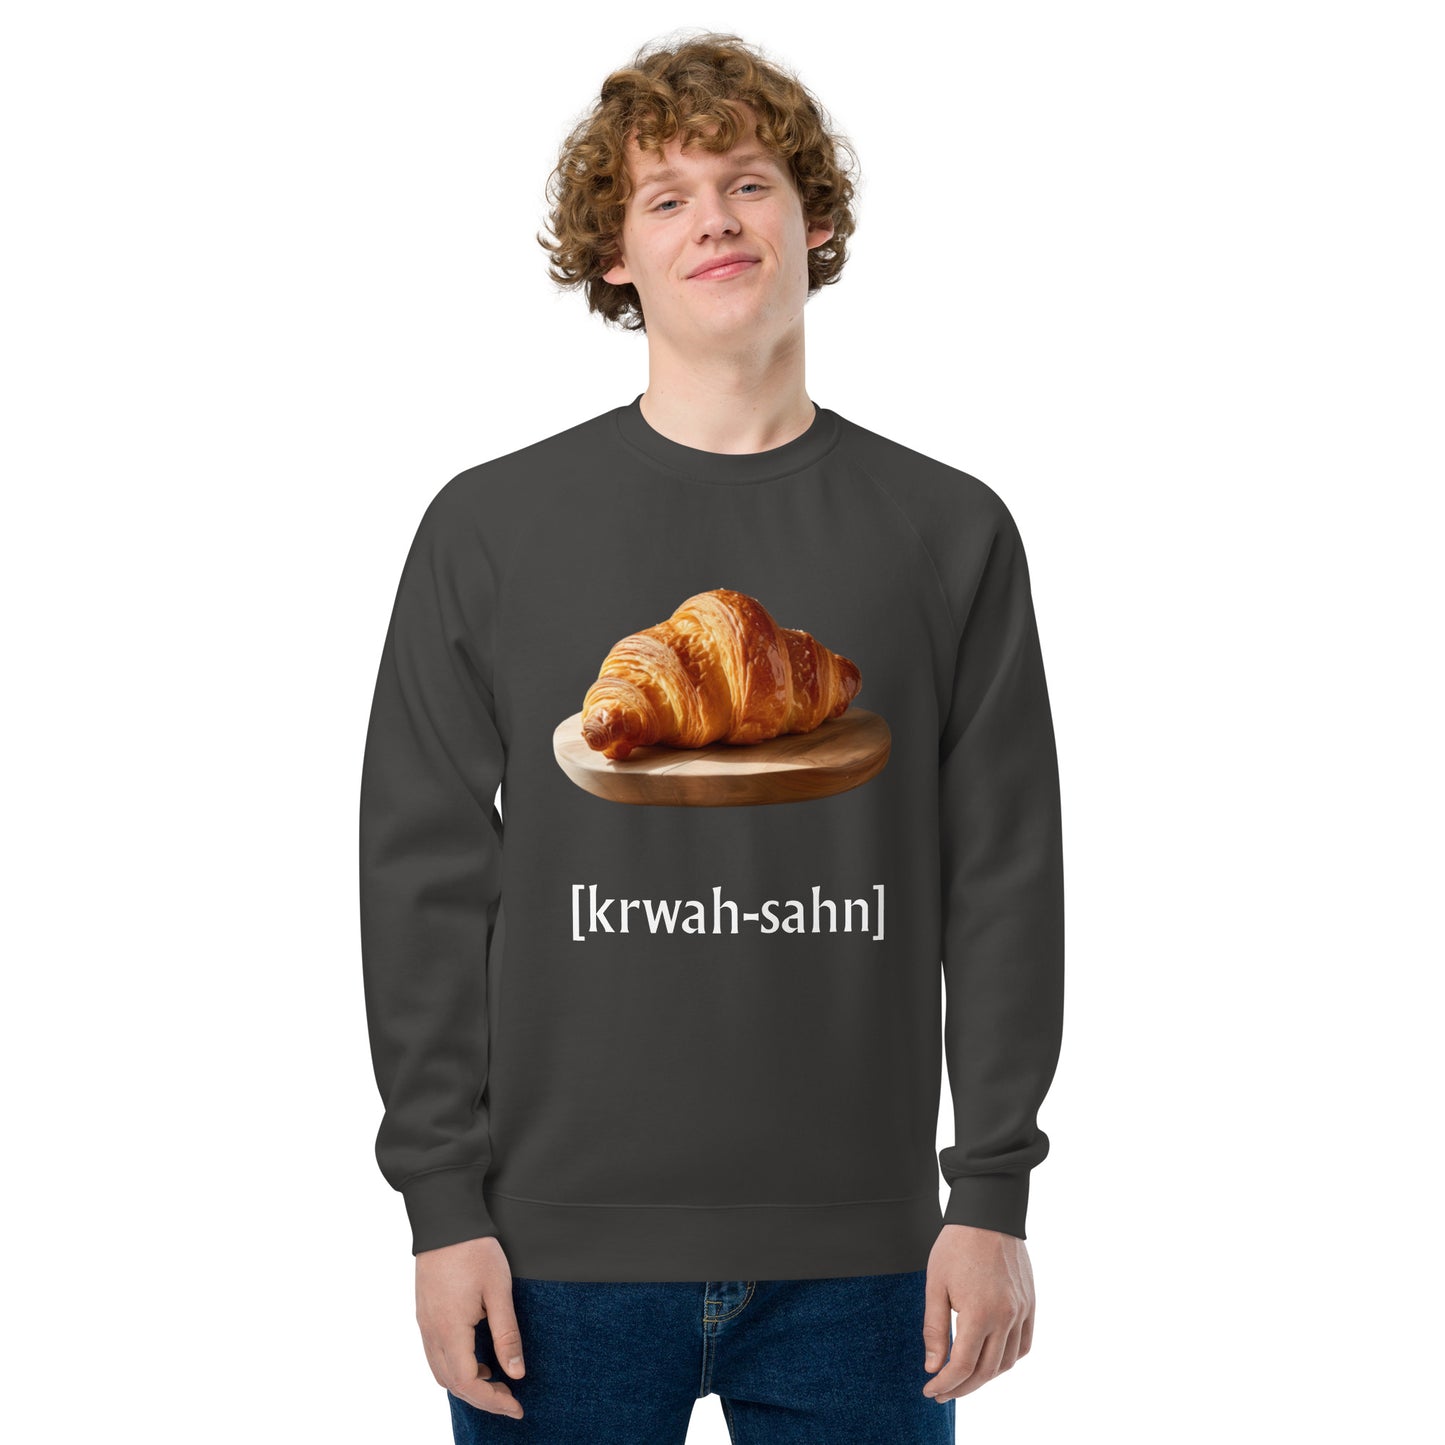 It's "Croissant" - Unisex raglan sweatshirt